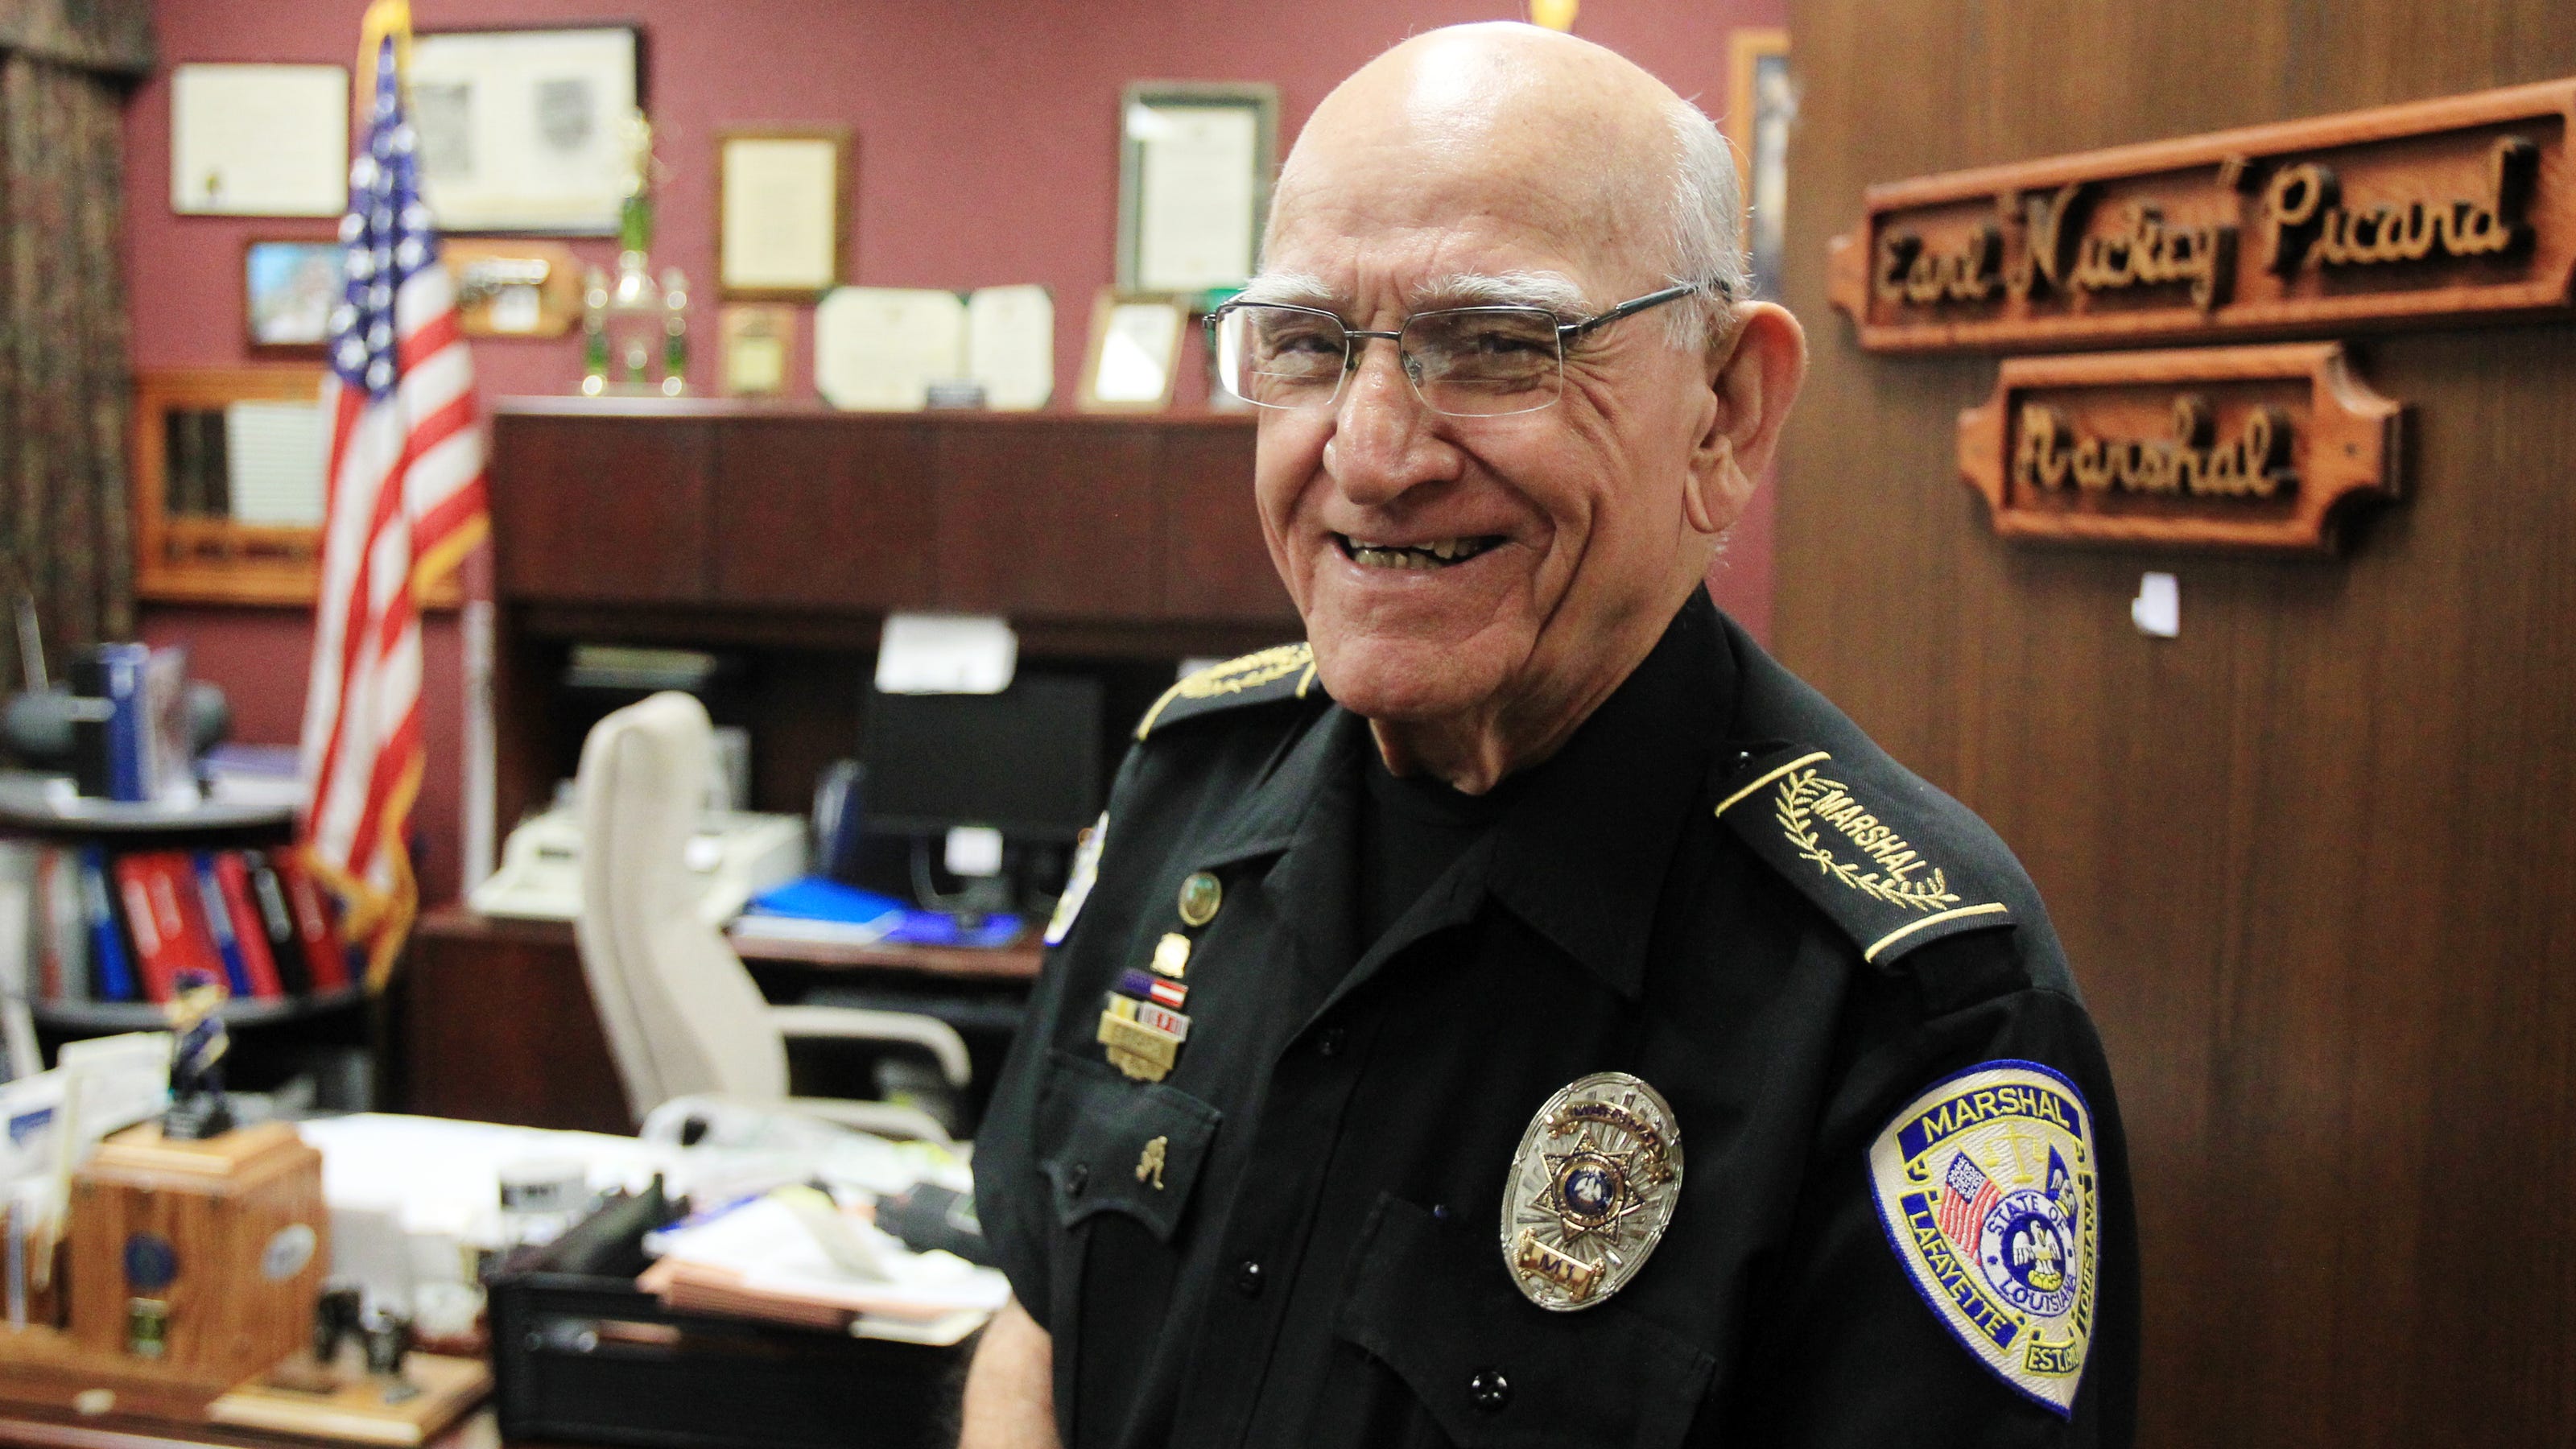 City marshal leaving three decades of legacy